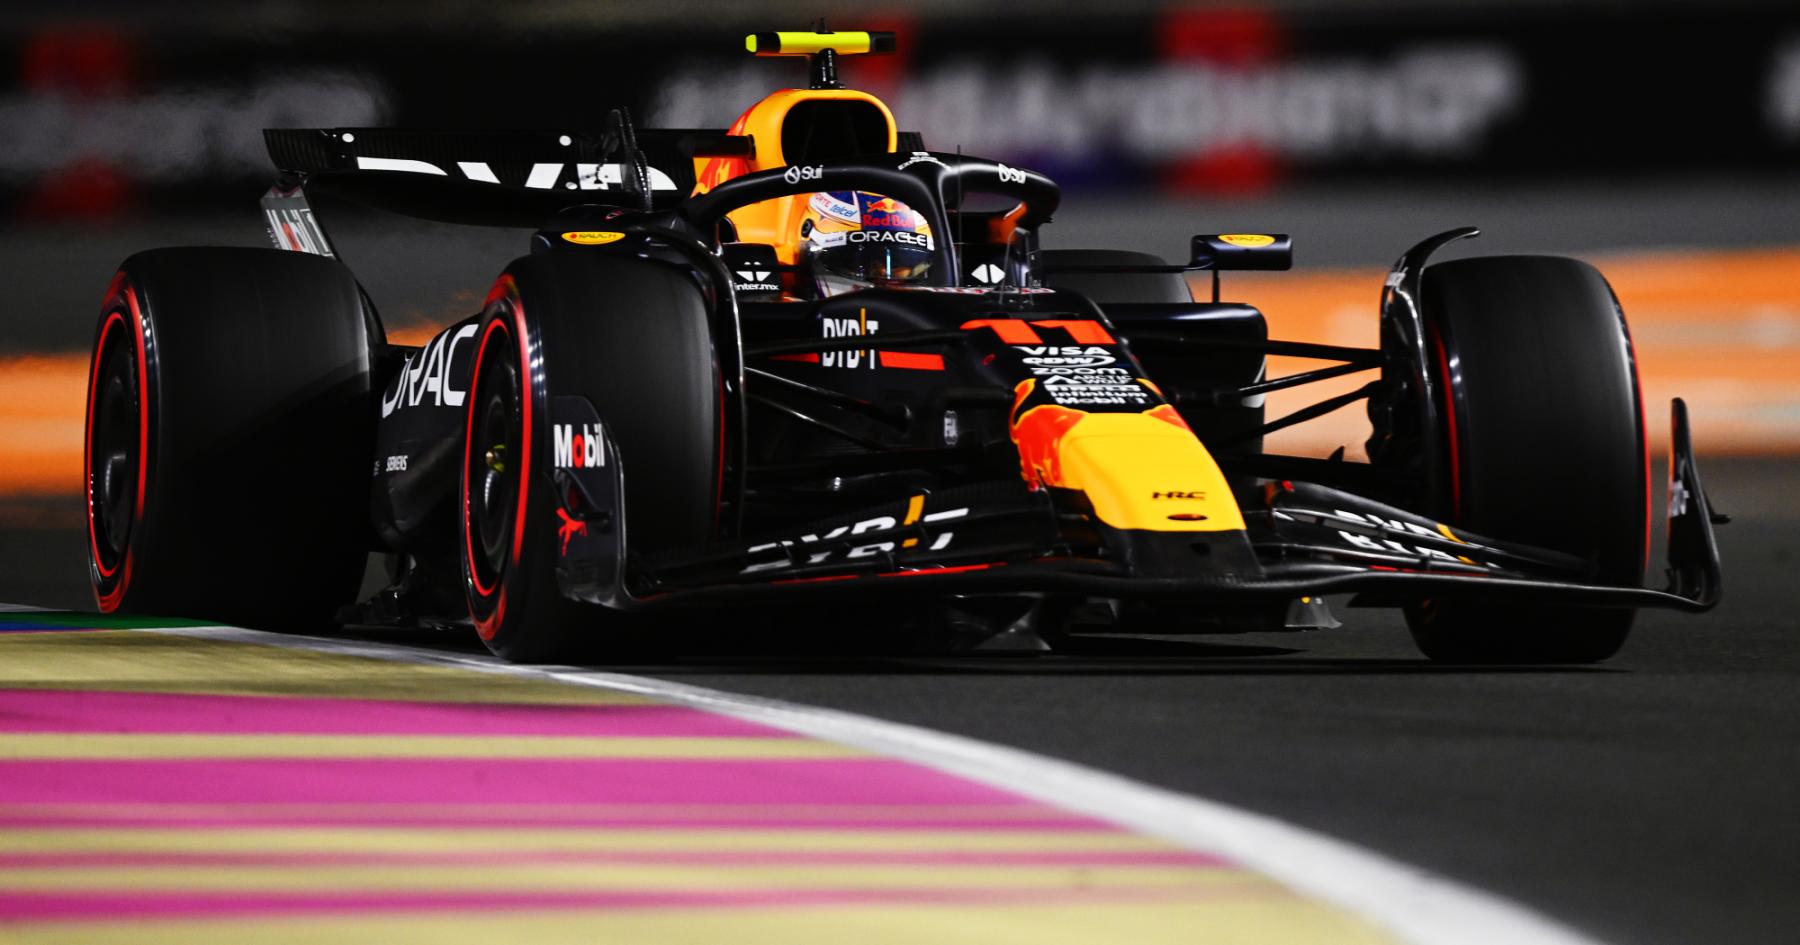 Controversy at the Saudi Arabian Grand Prix as Perez faces penalties